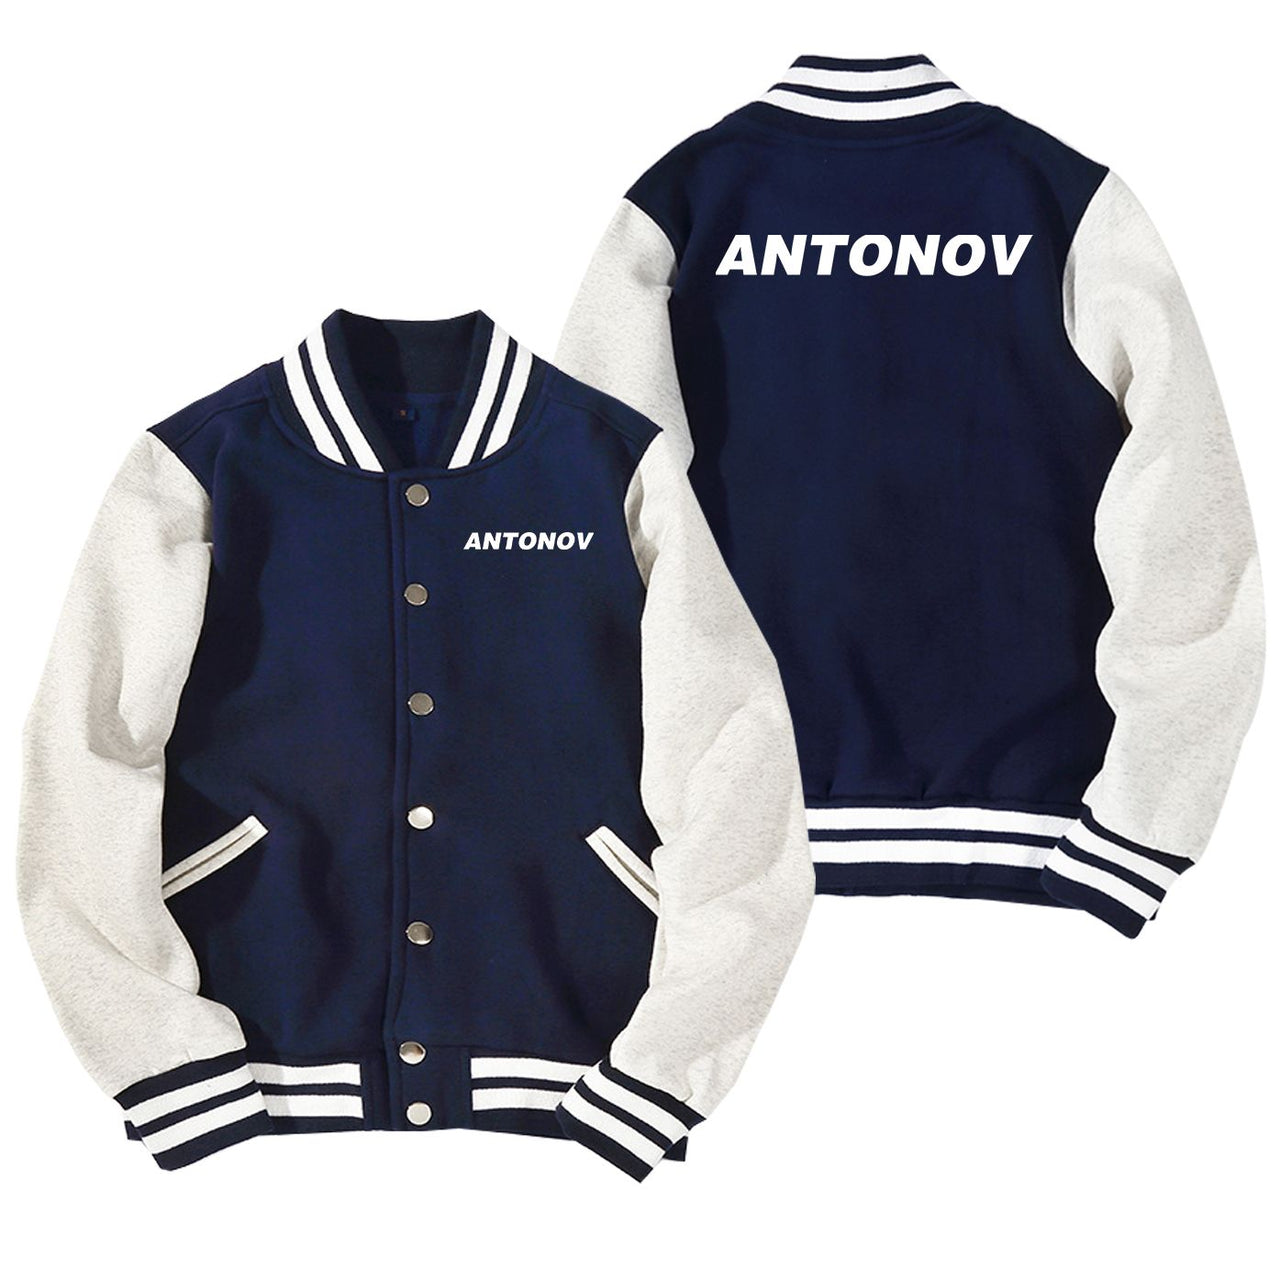 Antonov & Text Designed Baseball Style Jackets